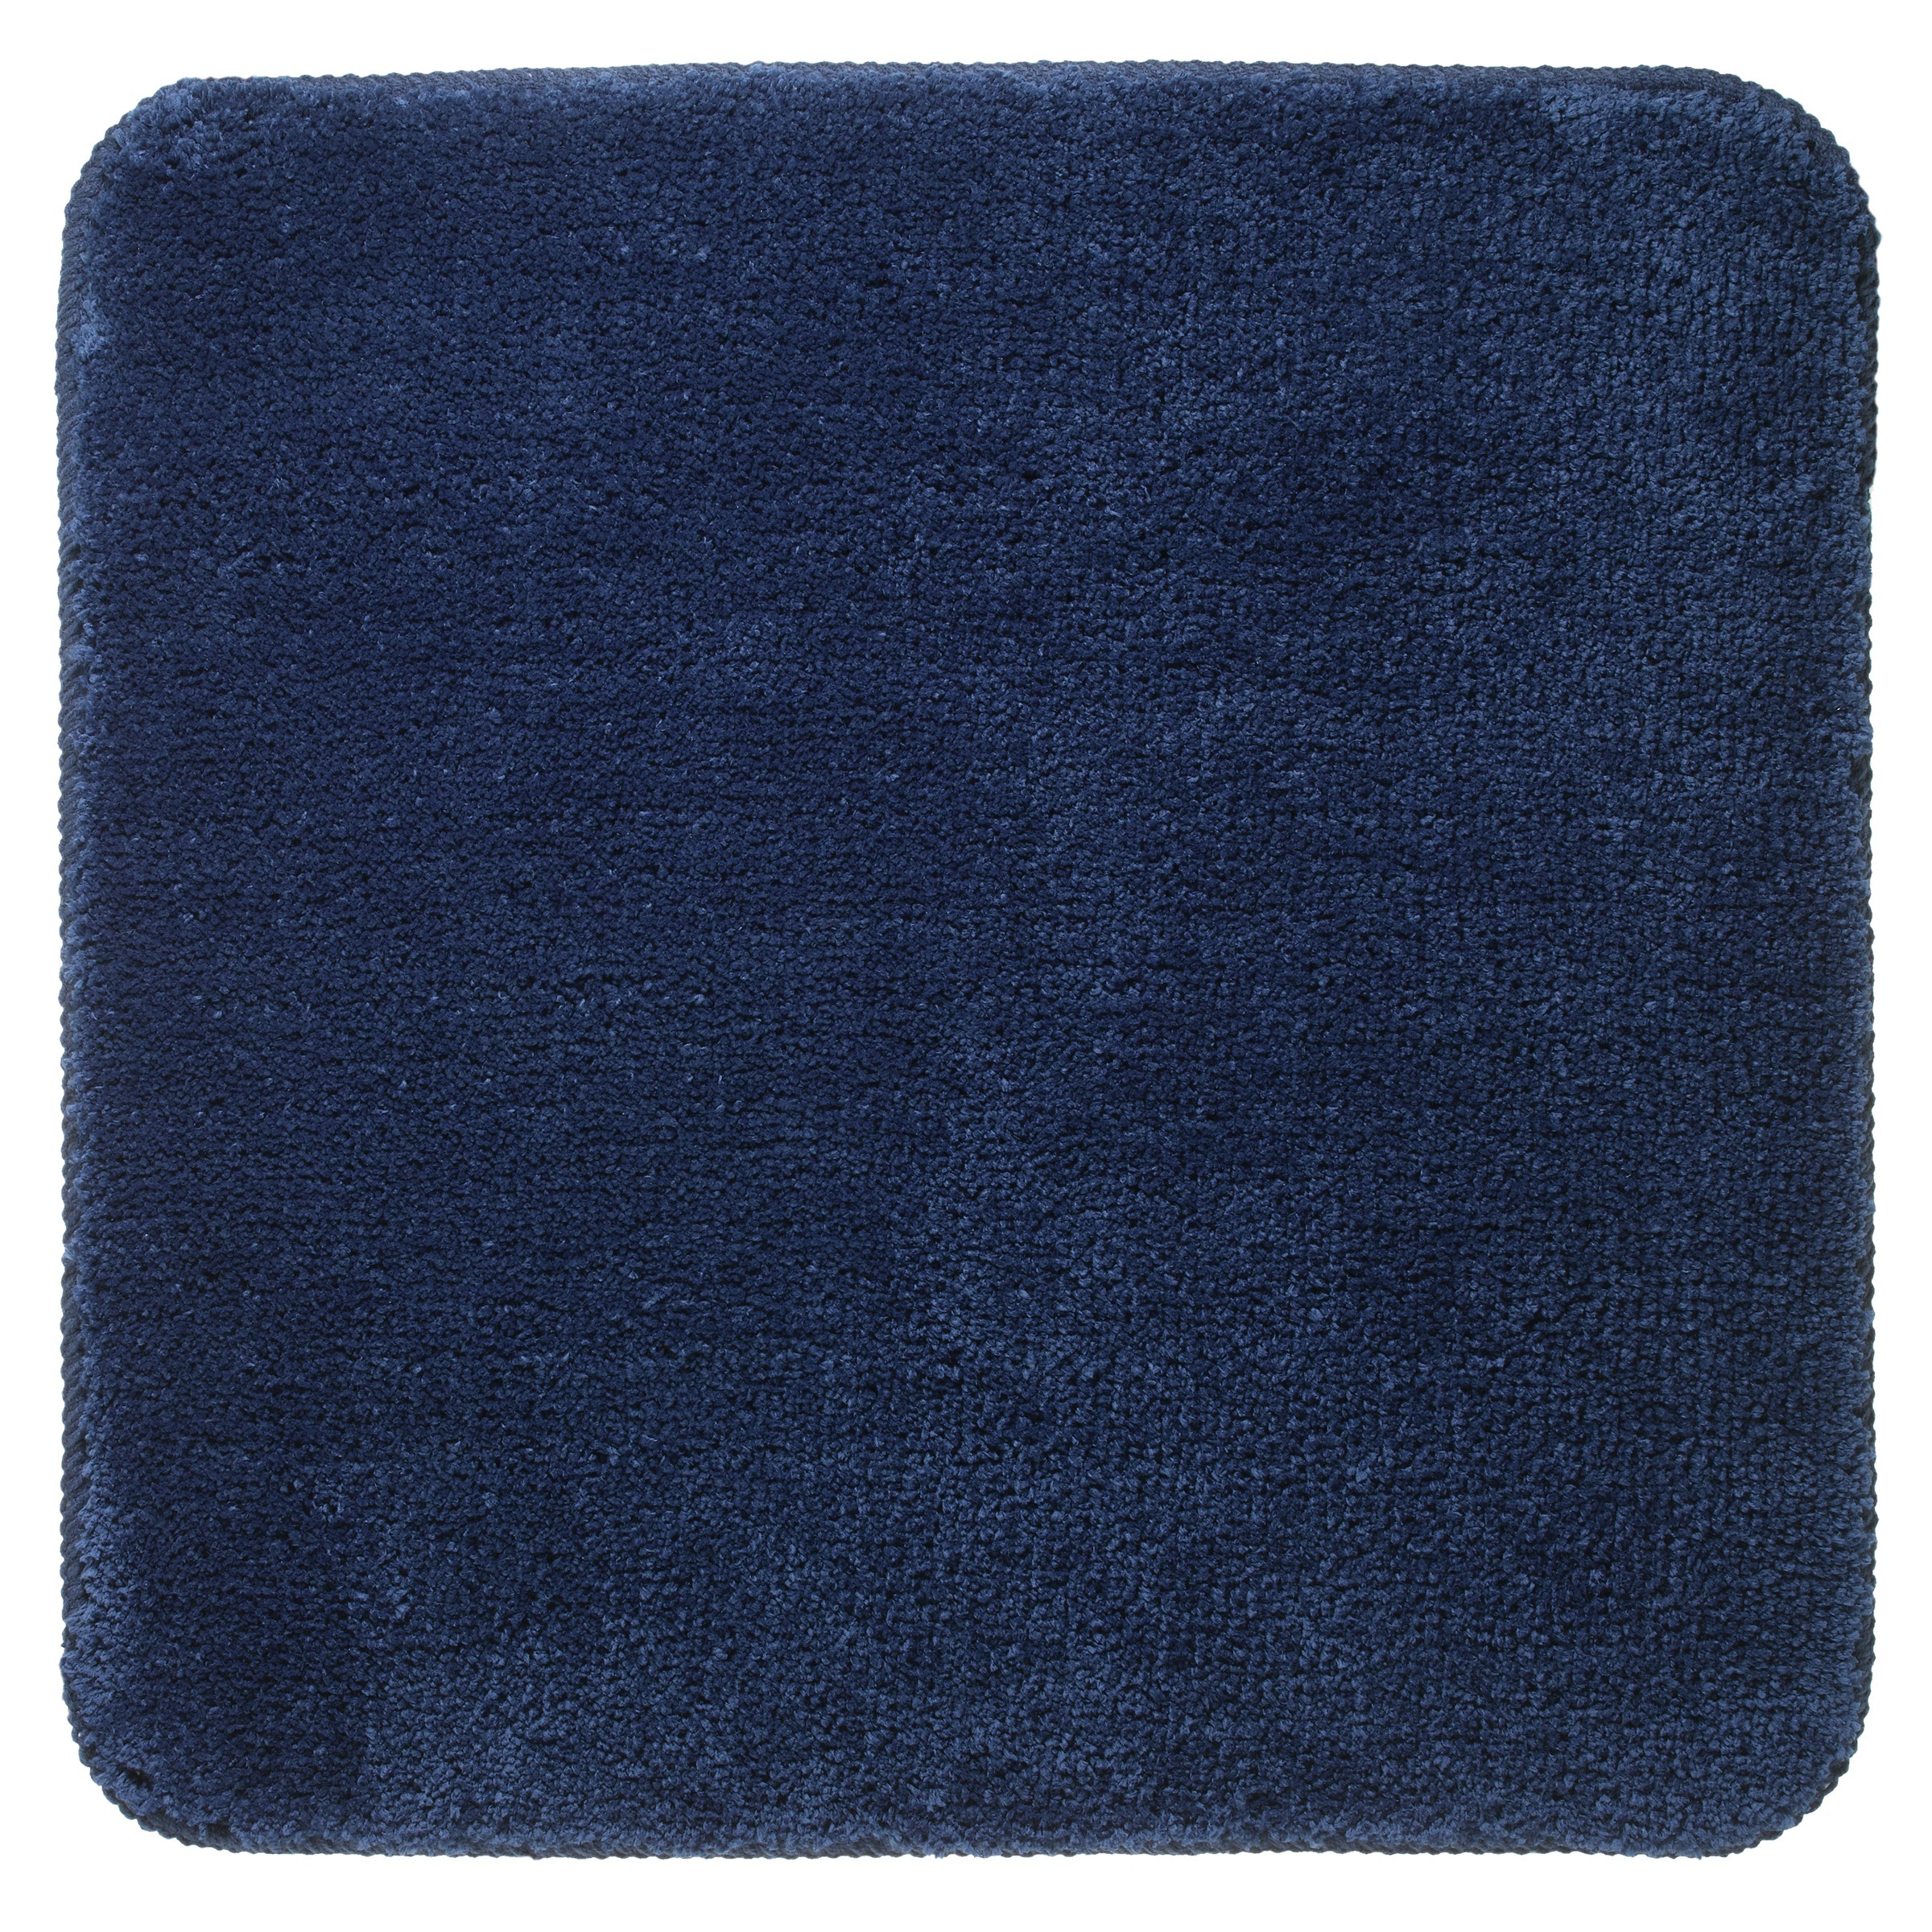 Sealskin Angora bidetmat Polyester 60x60cm blauw 293996824